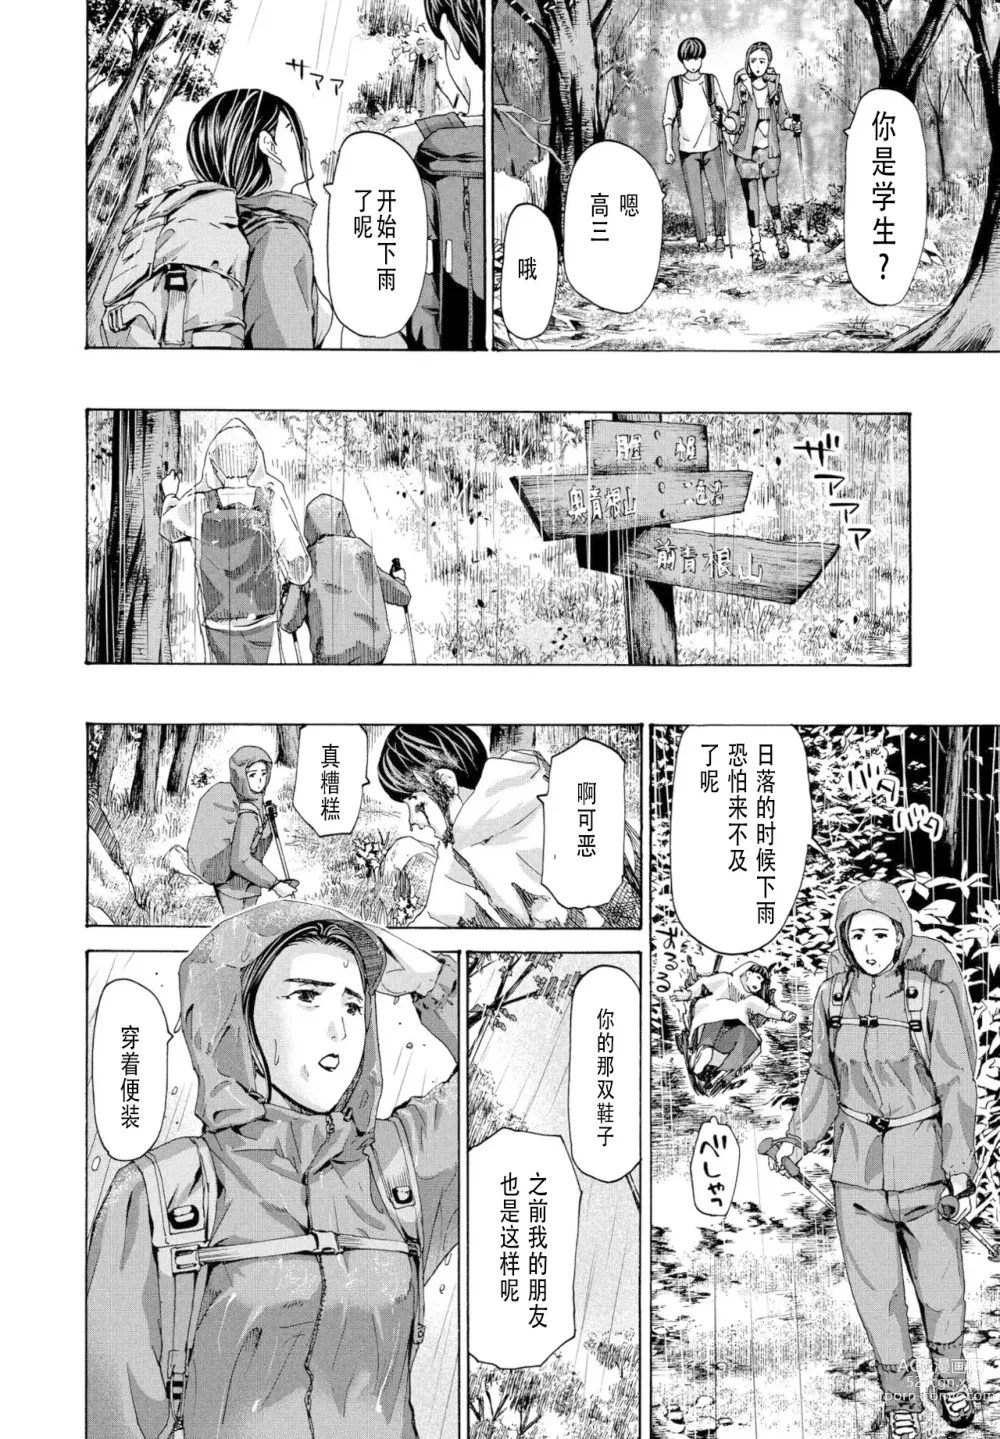 Page 2 of manga 避难小屋